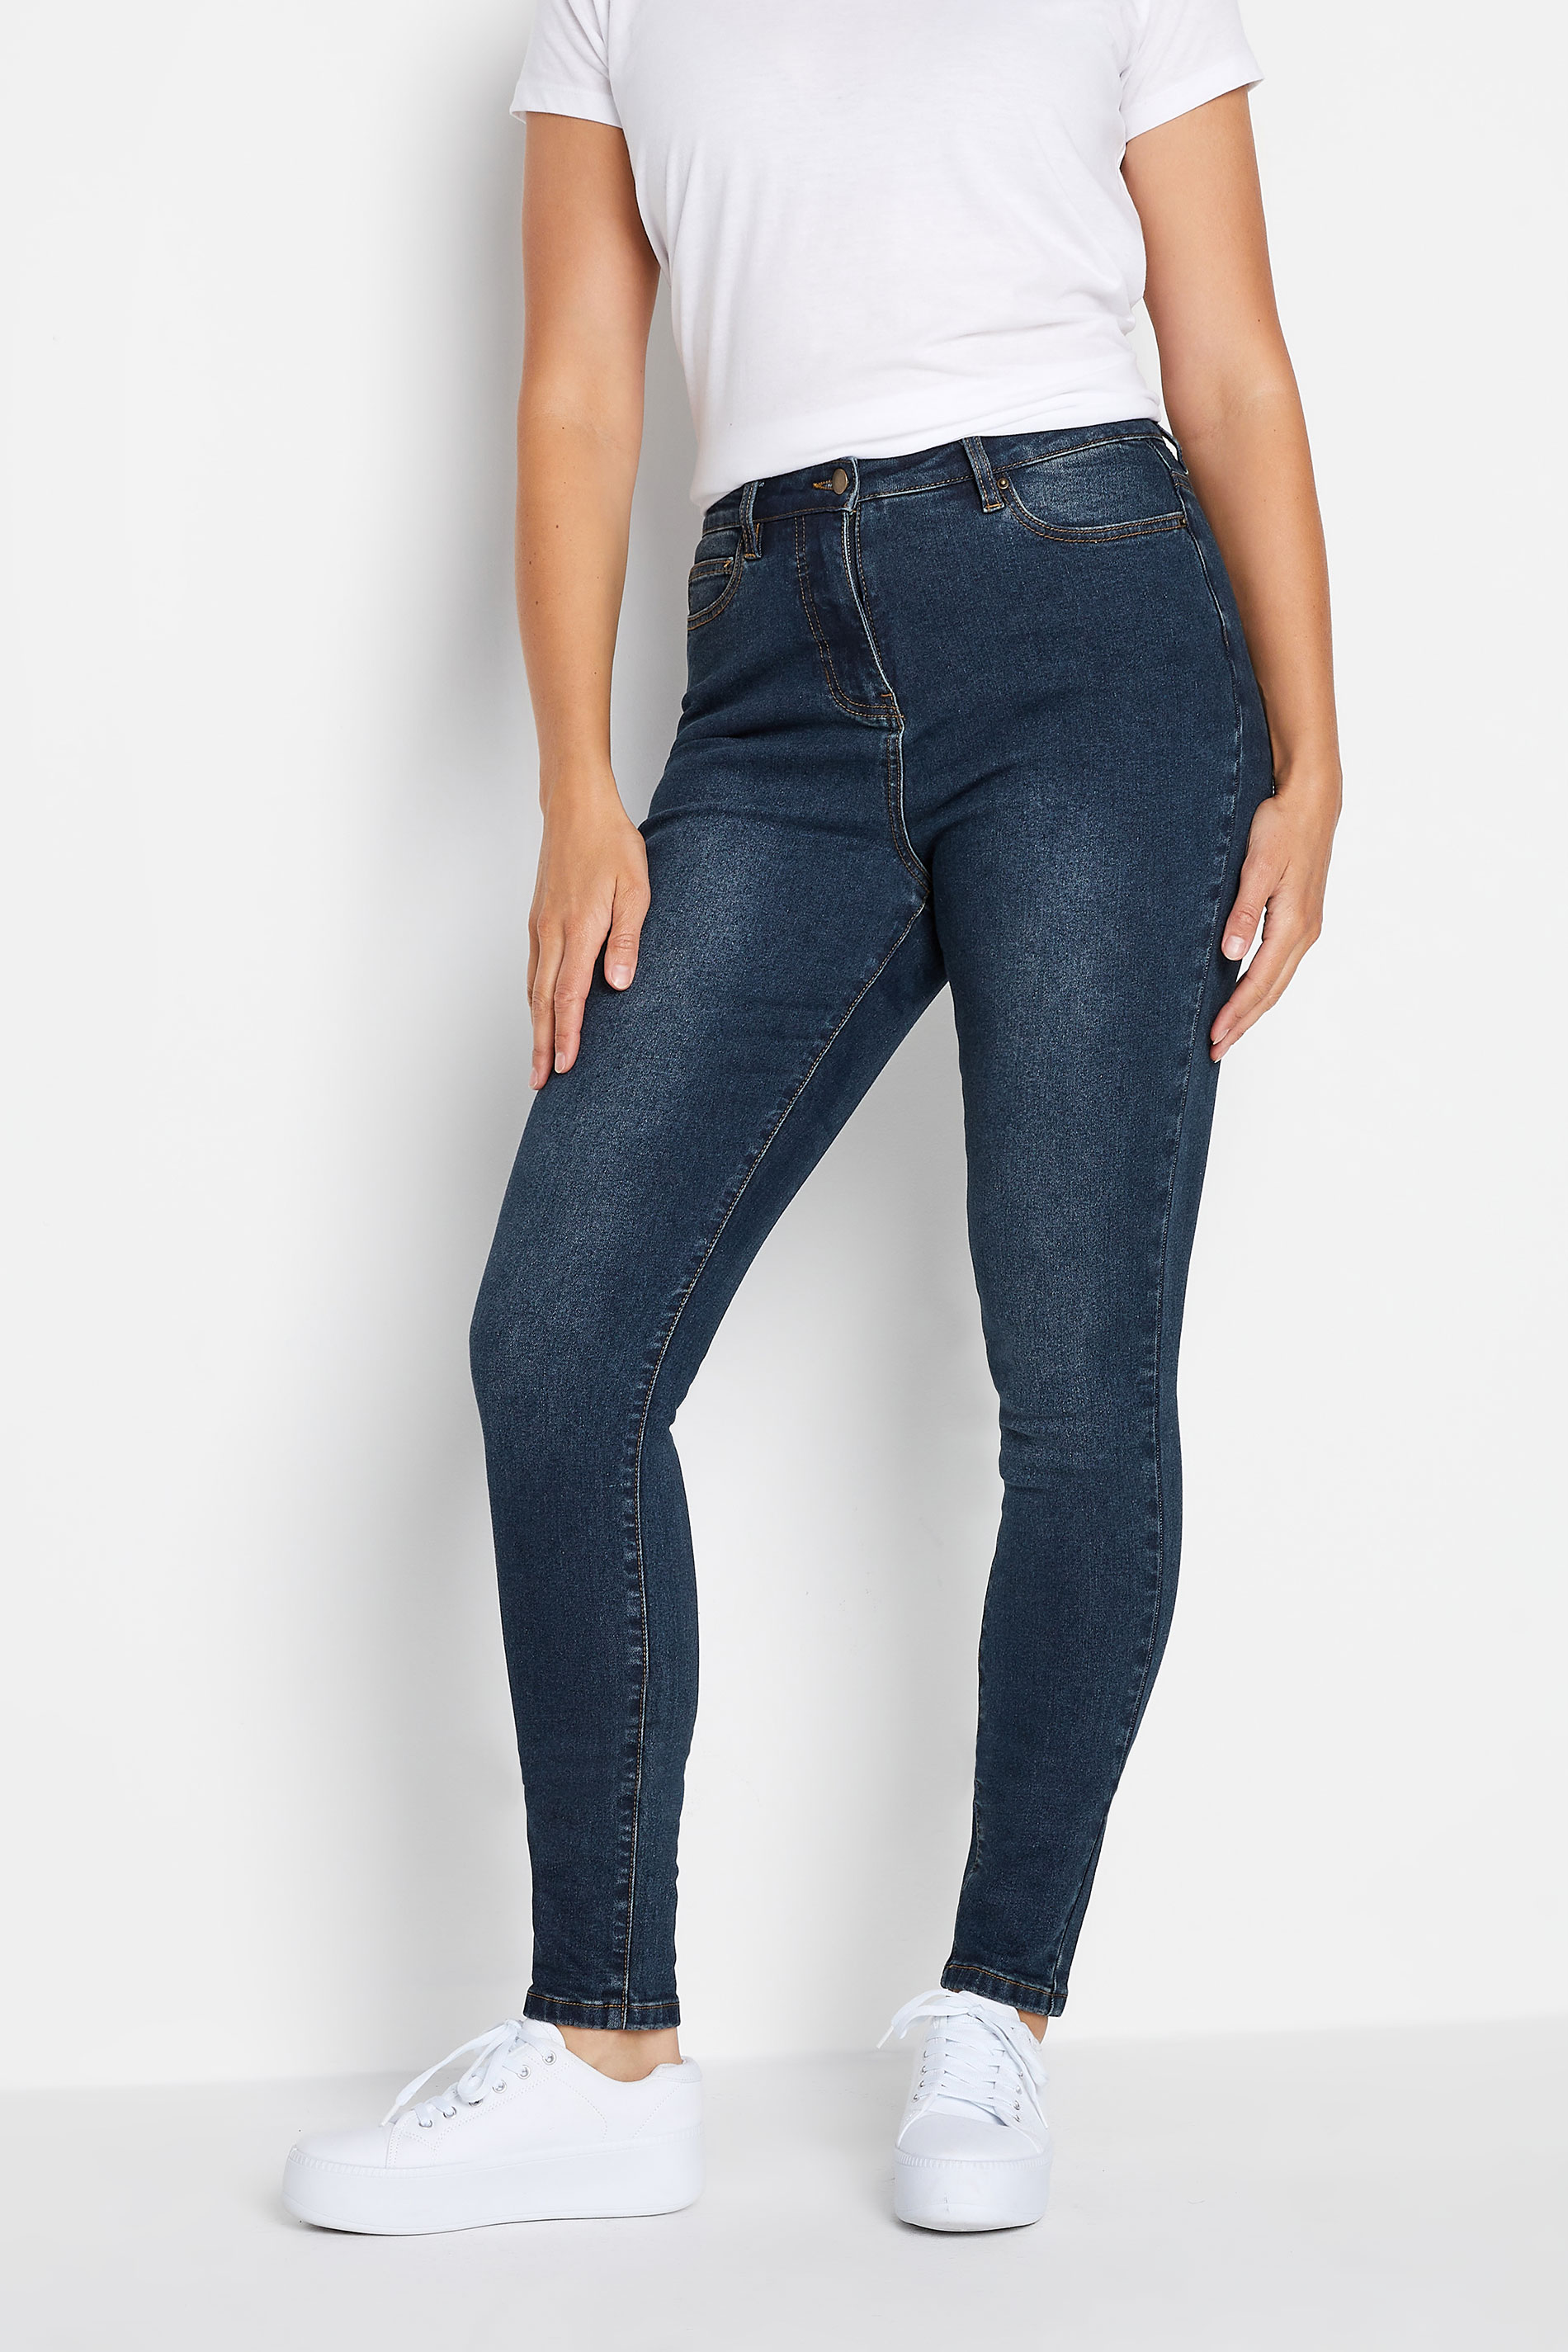 LTS Tall Blue AVA Skinny Jeans | Long Tall Sally